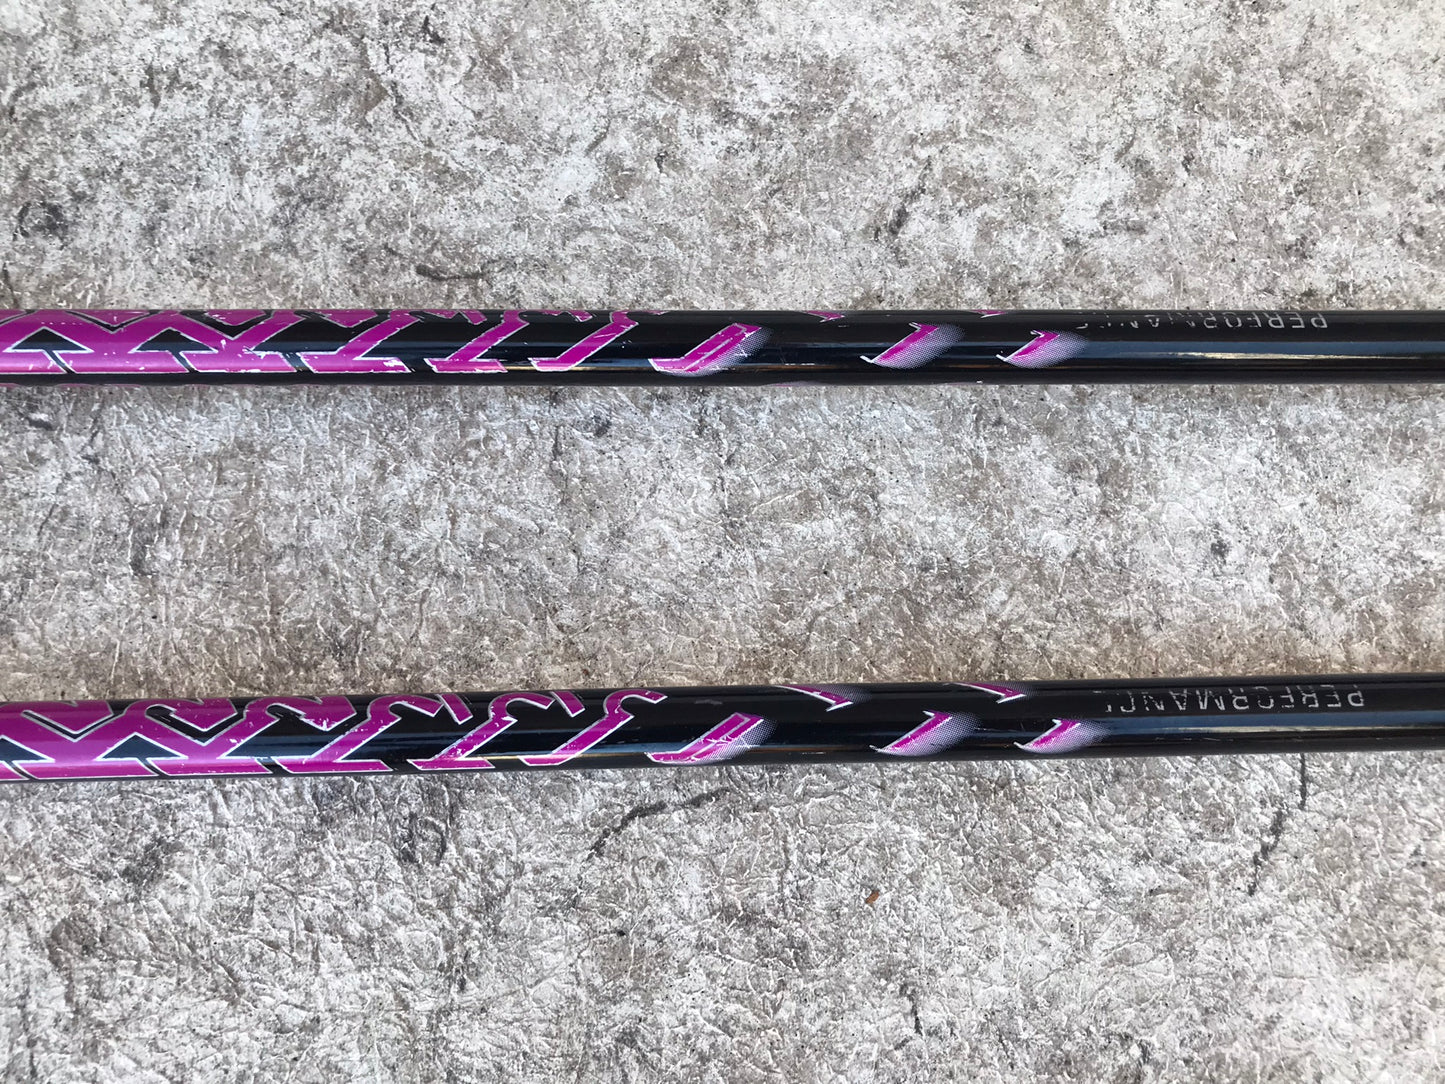 Ski Poles Adult Size 48 inch 120 cm K-2 Black Pink Rubber Handles Excellent